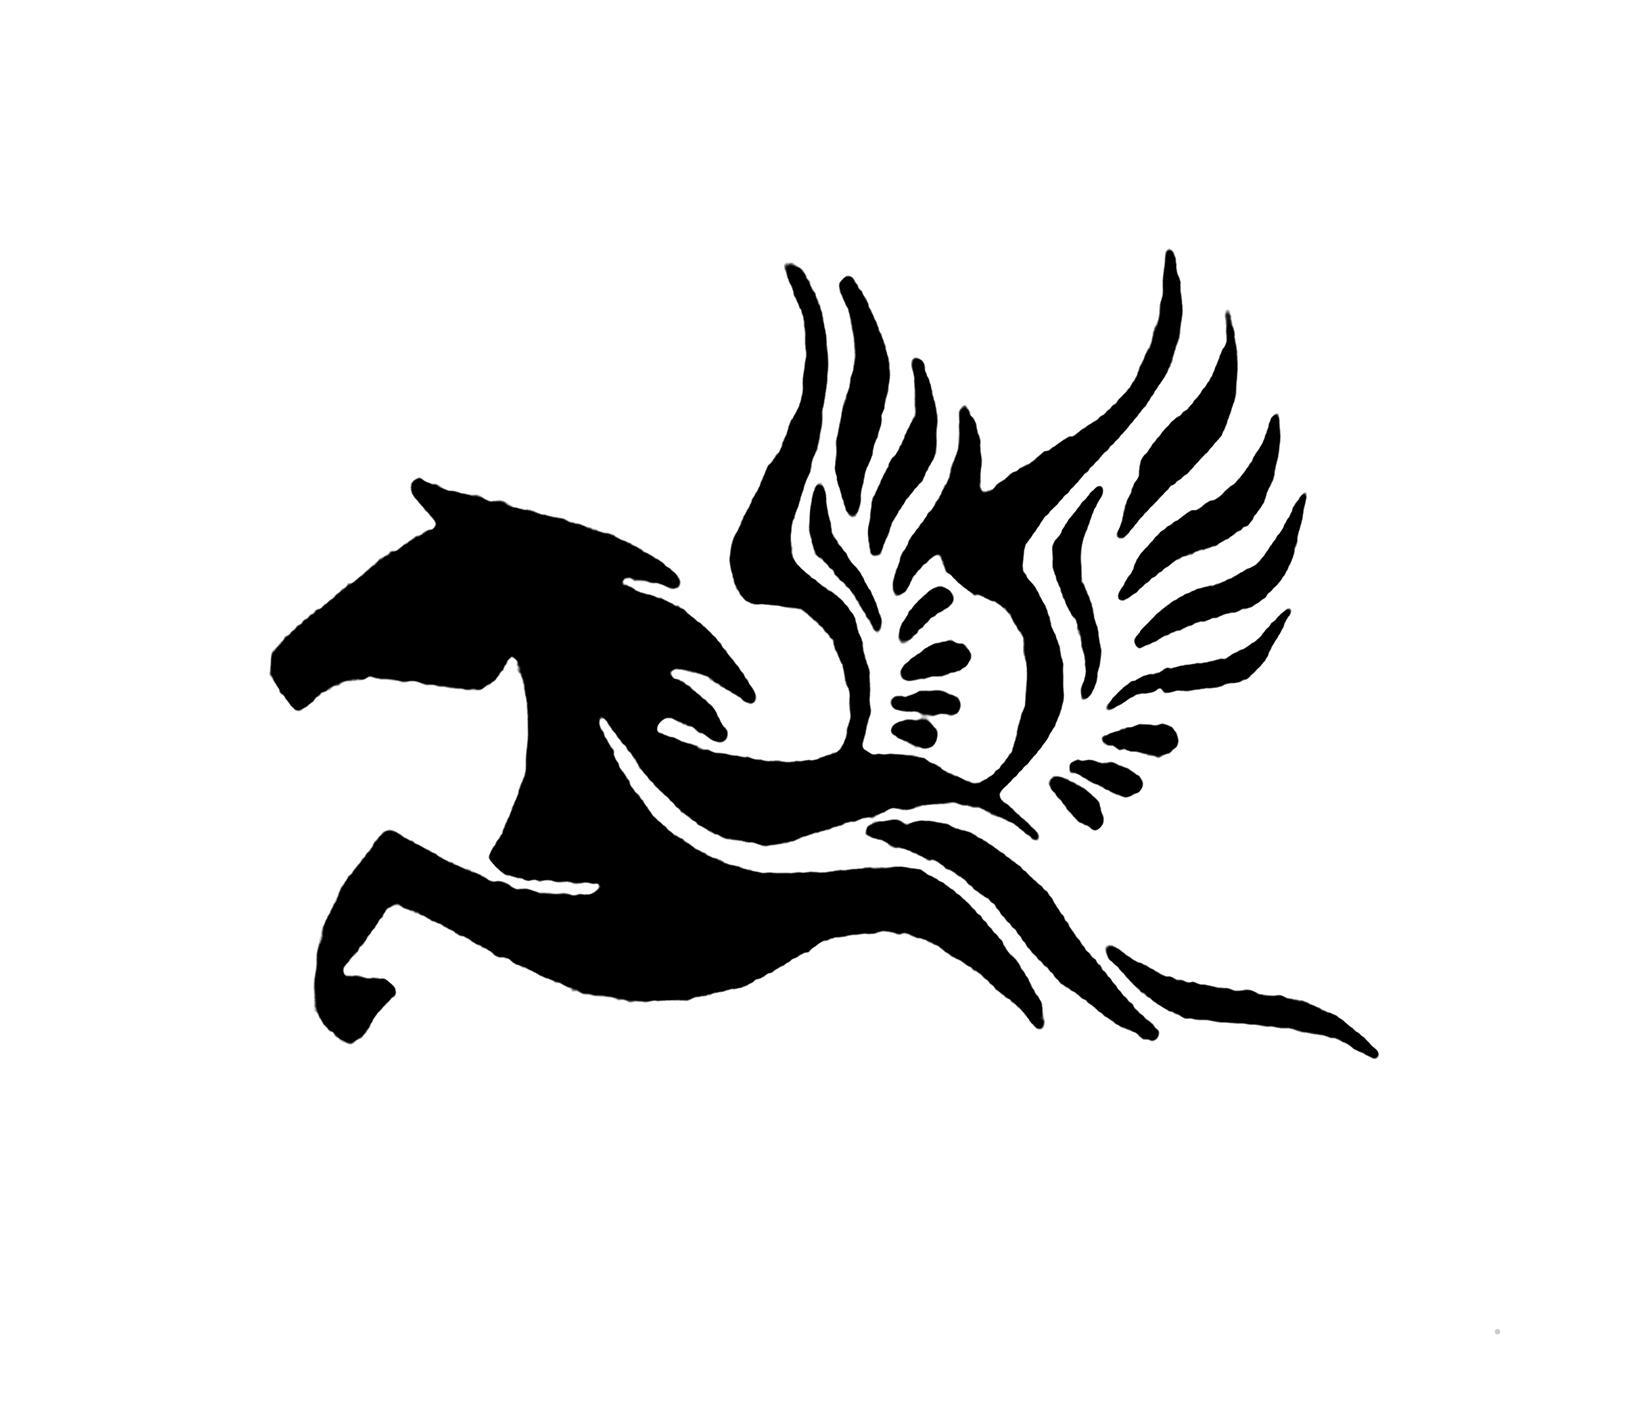 图形logo